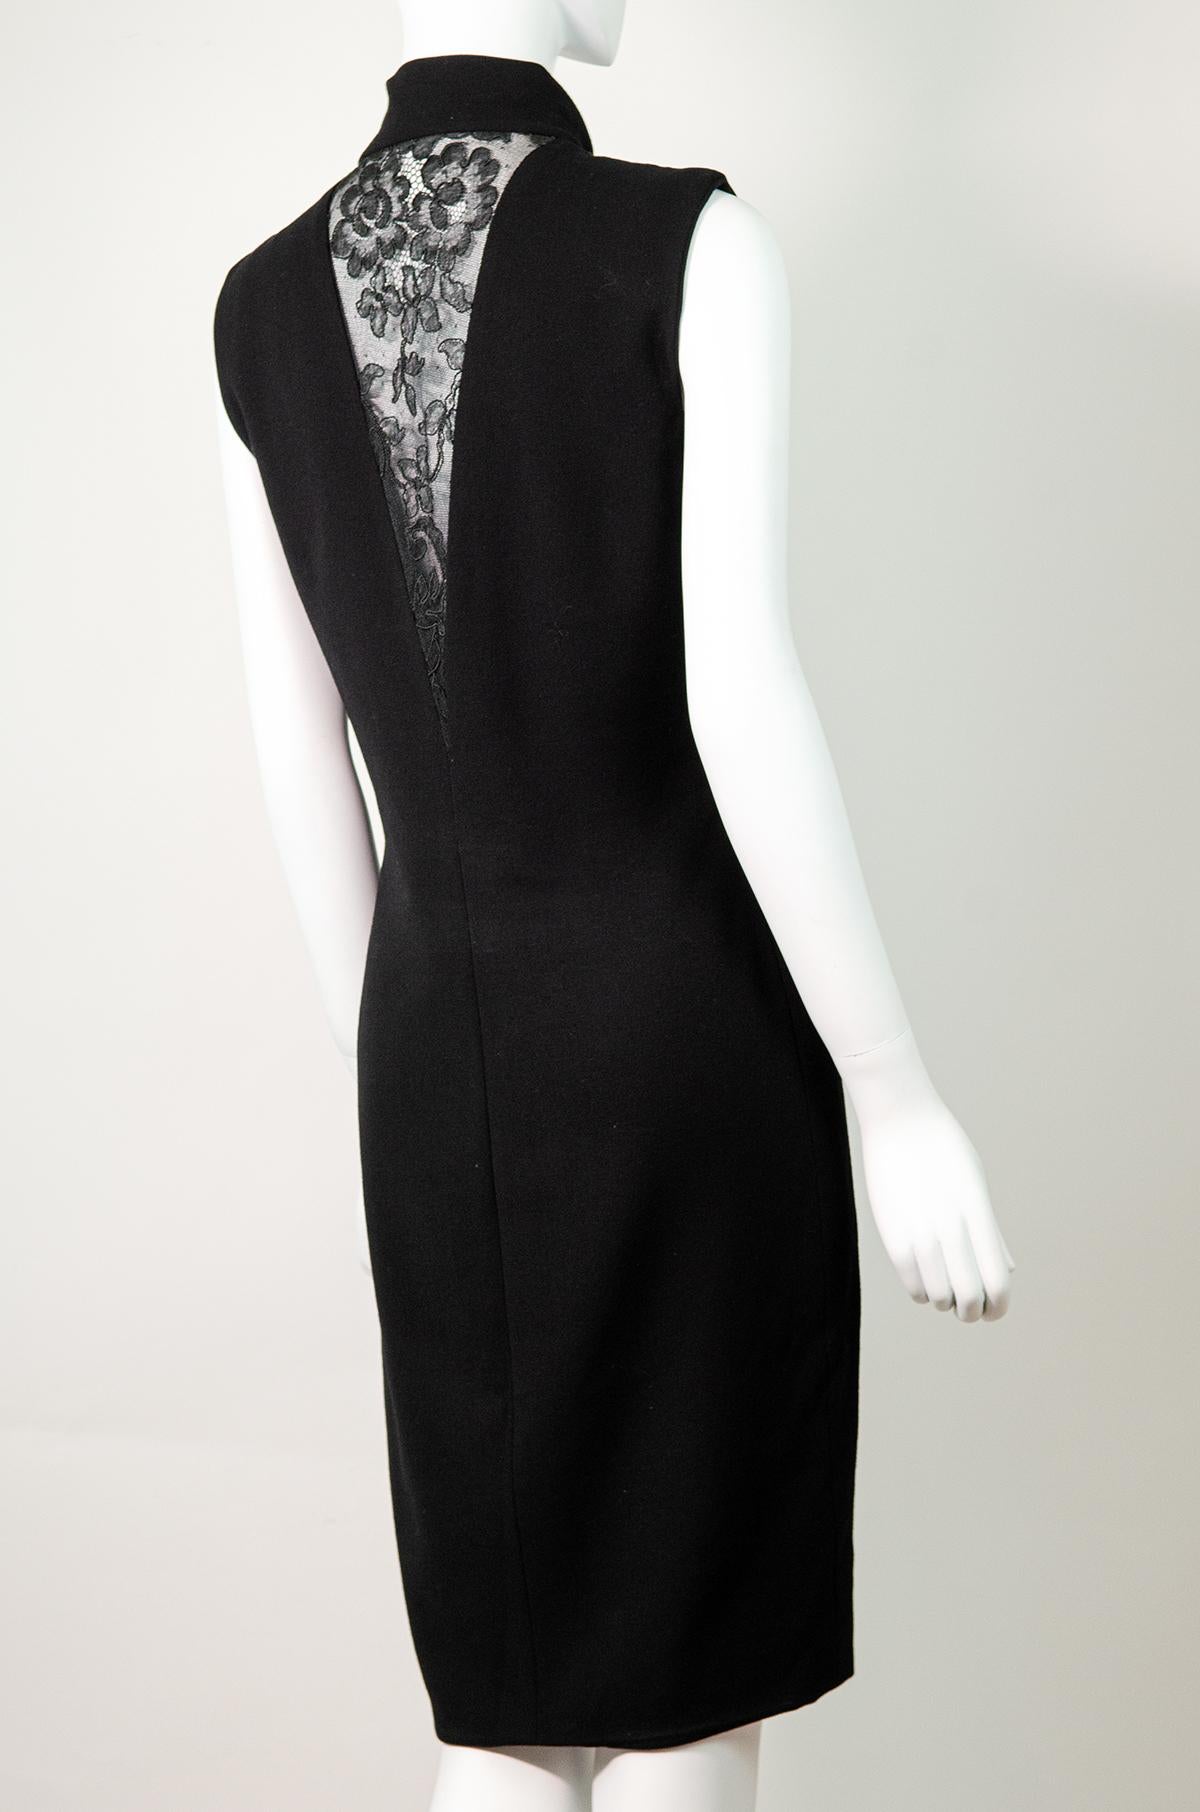 Women's or Men's VERSACE F/W 1993 Vintage Lace Detail Black Dress by Gianni Versace For Sale